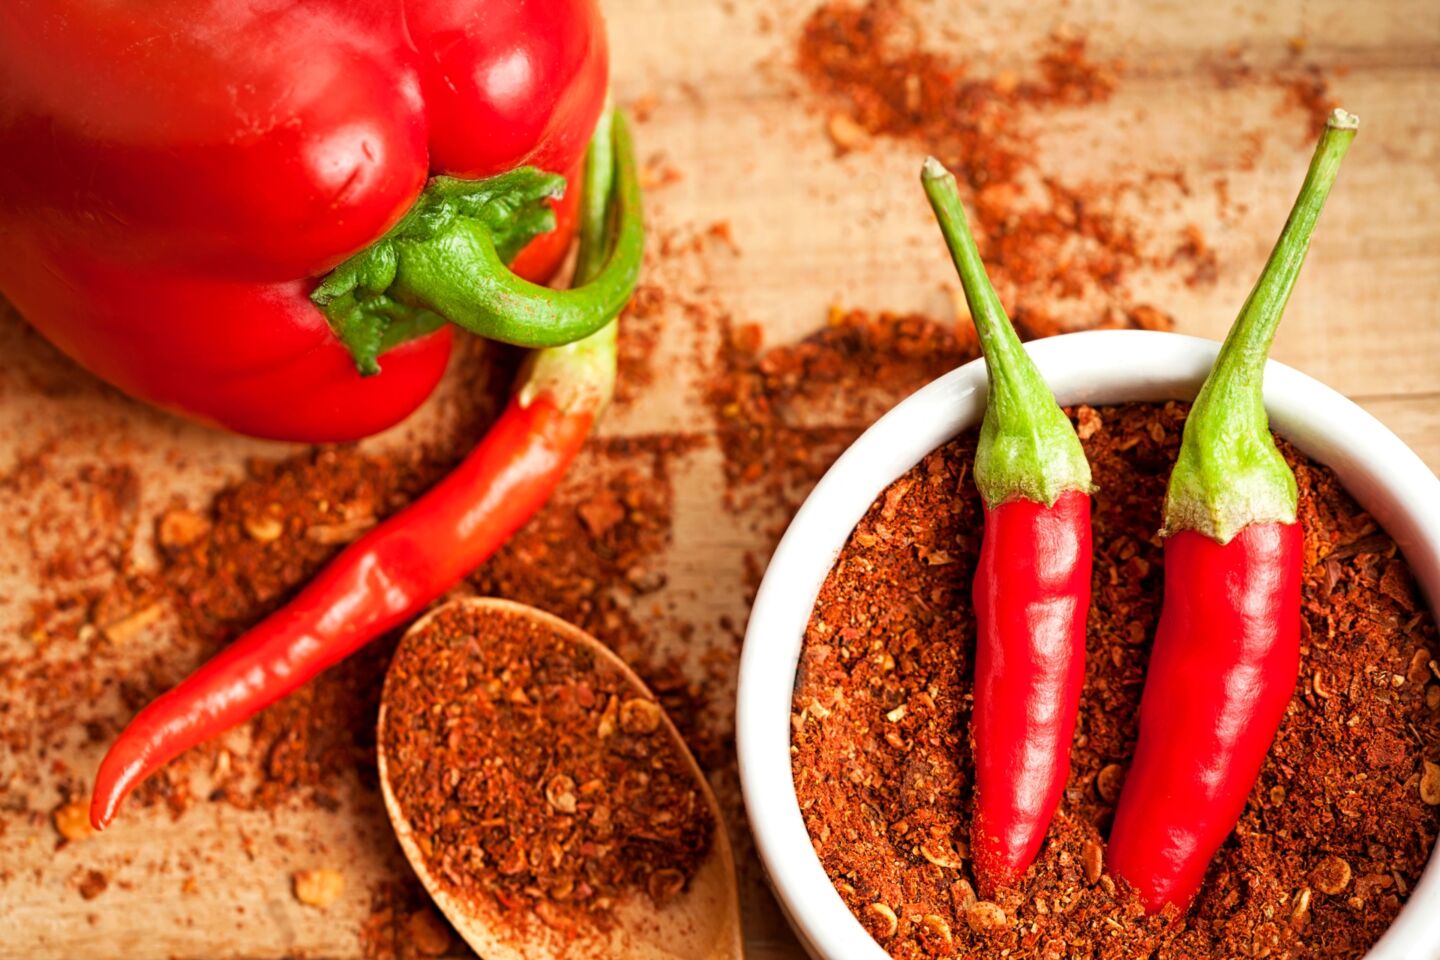 10 southern seasonings - cayenne pepper